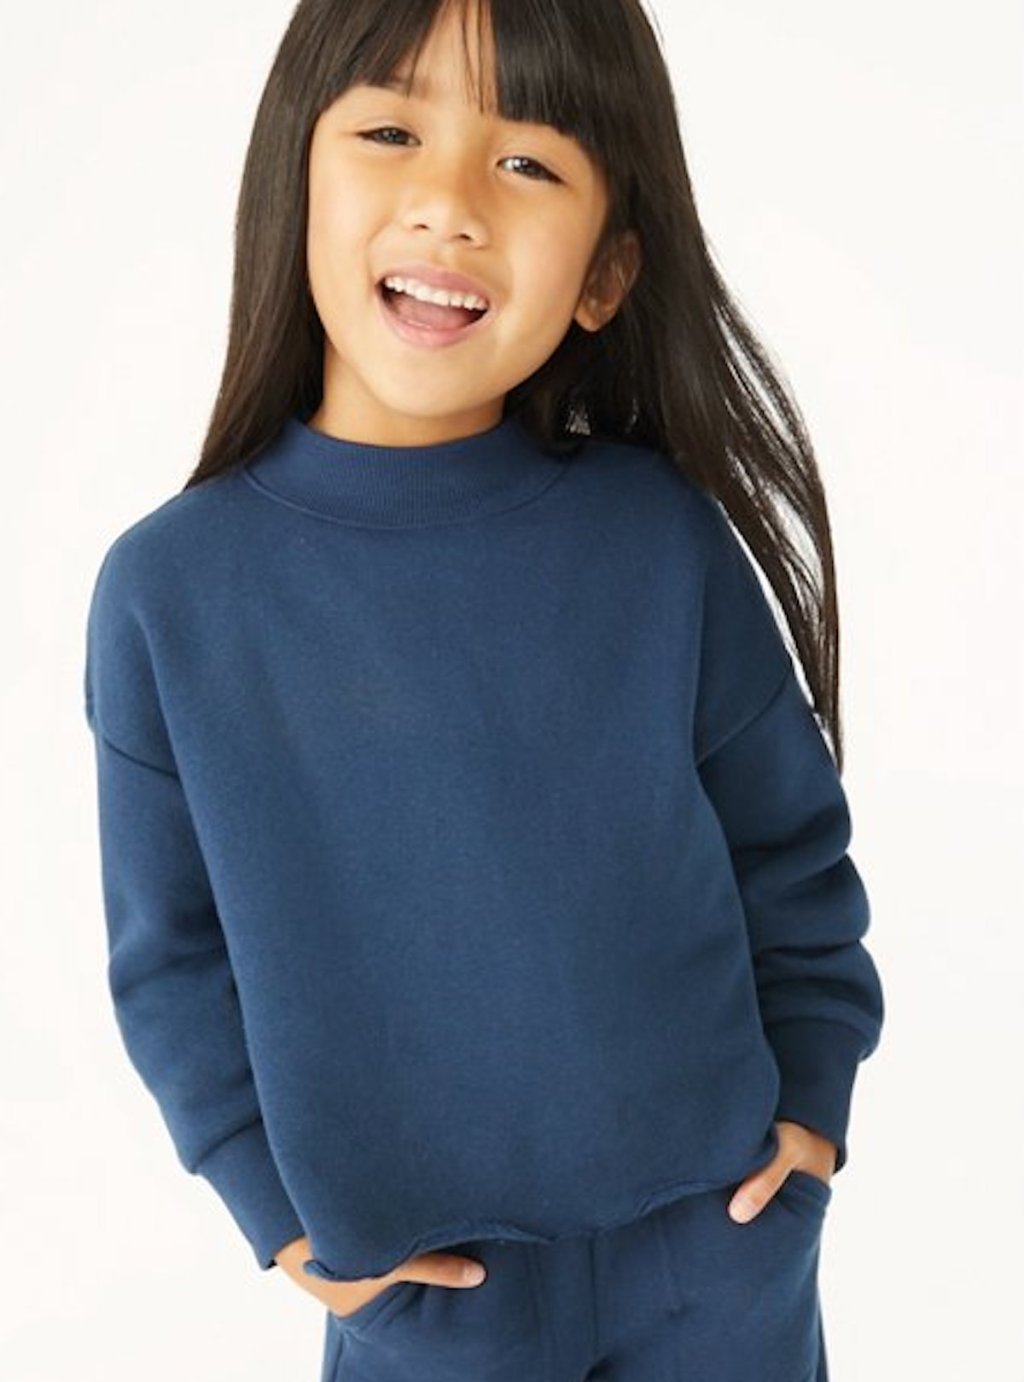 stock photo of girl wearing blue sweater 